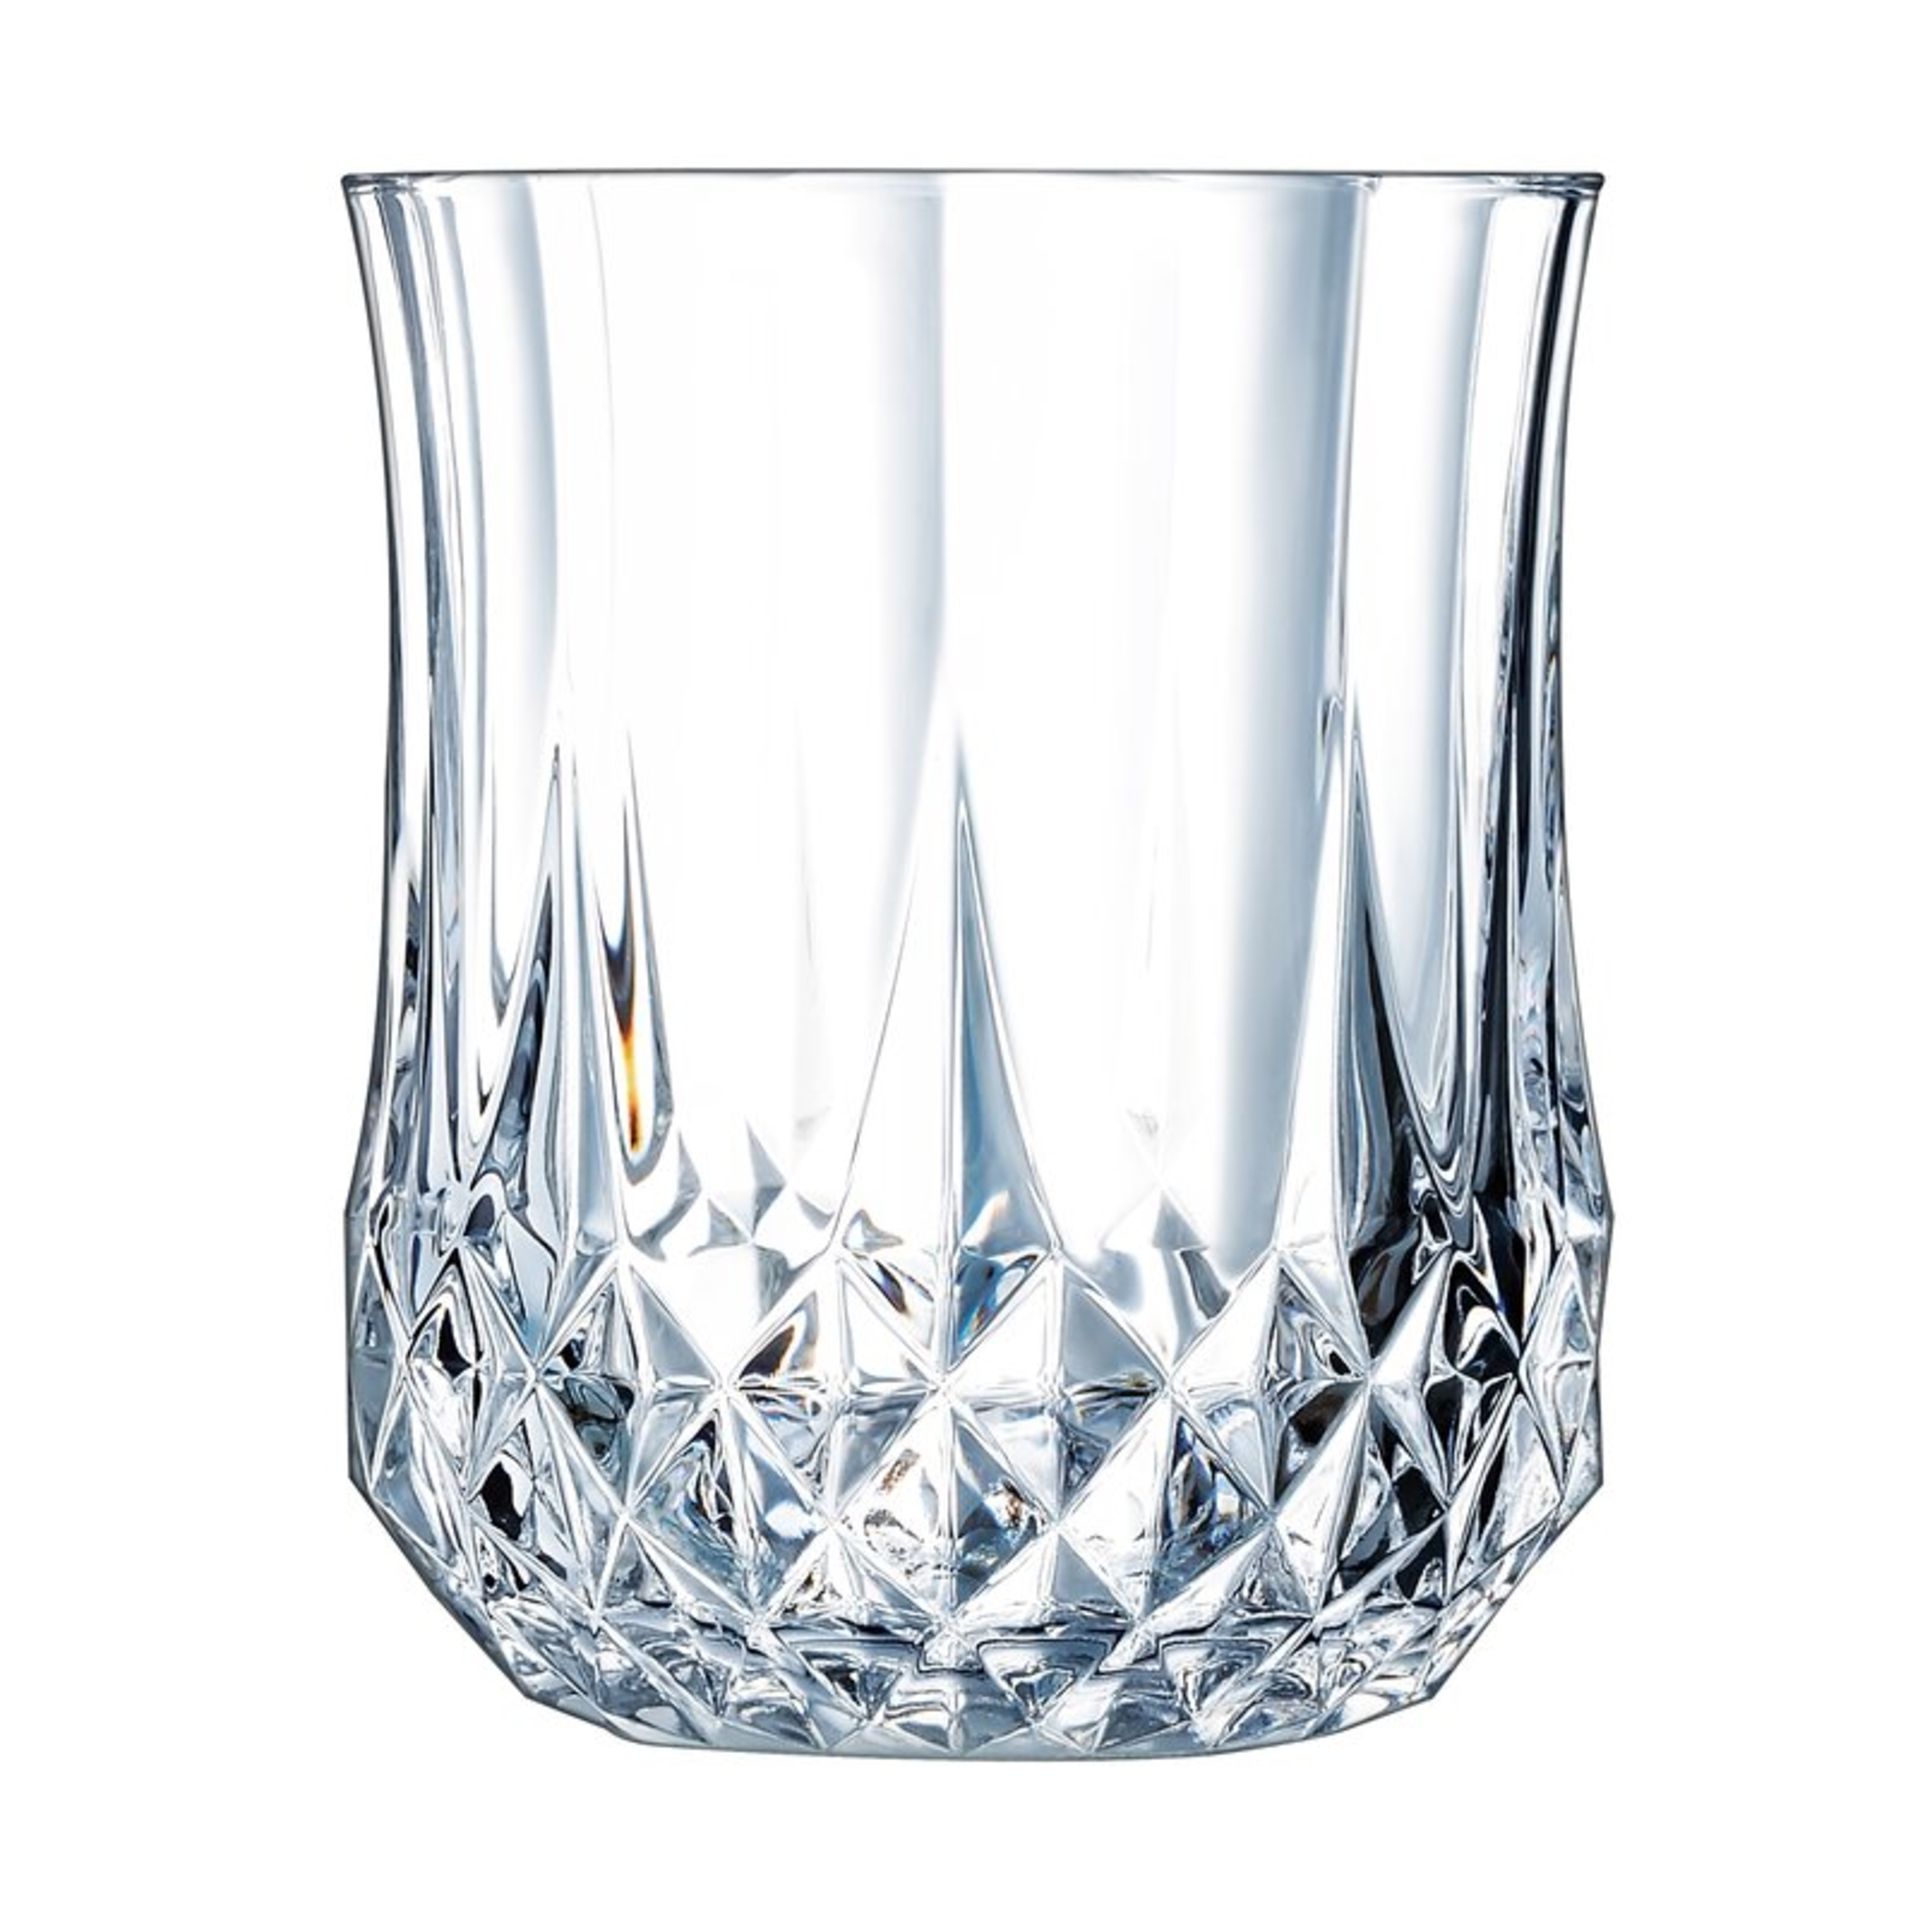 Set 0f 6 Longchamp 230ml Lead Free Crystal Drinking Glasses - £24.99